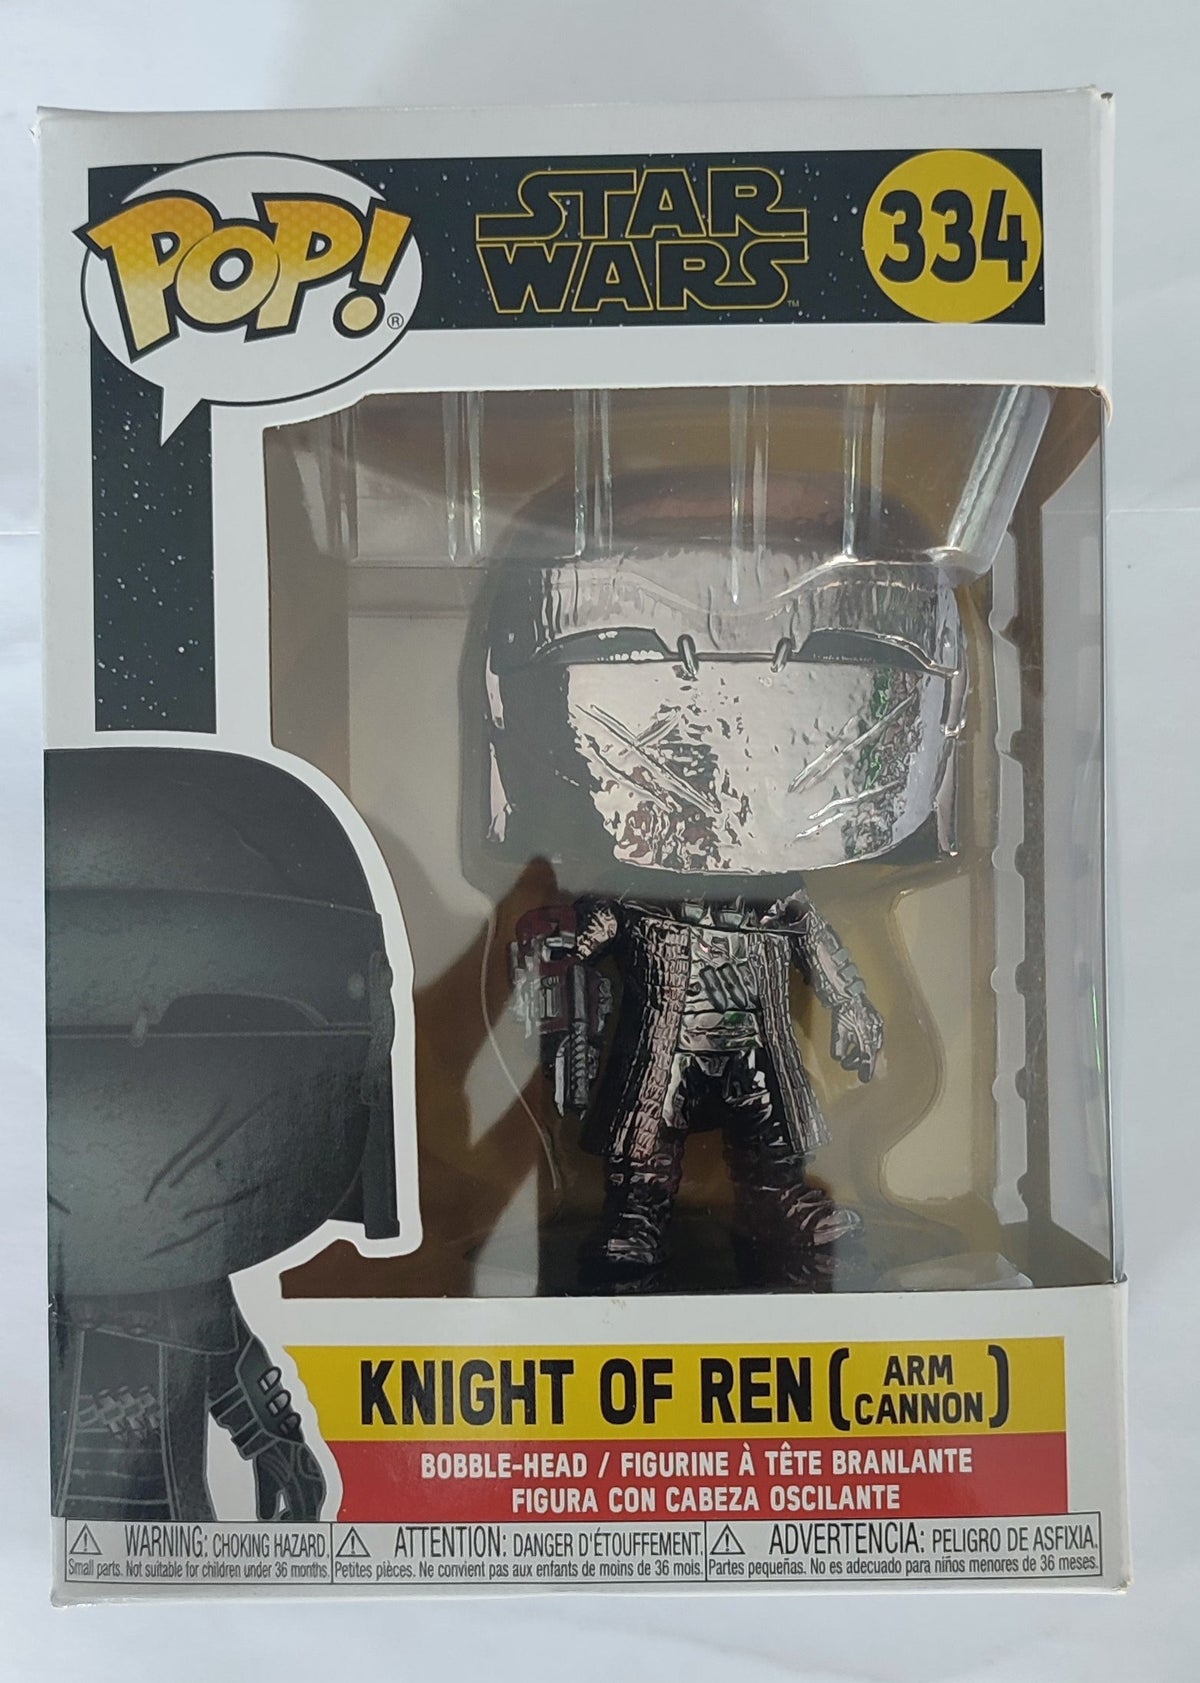 Knight of ren #334